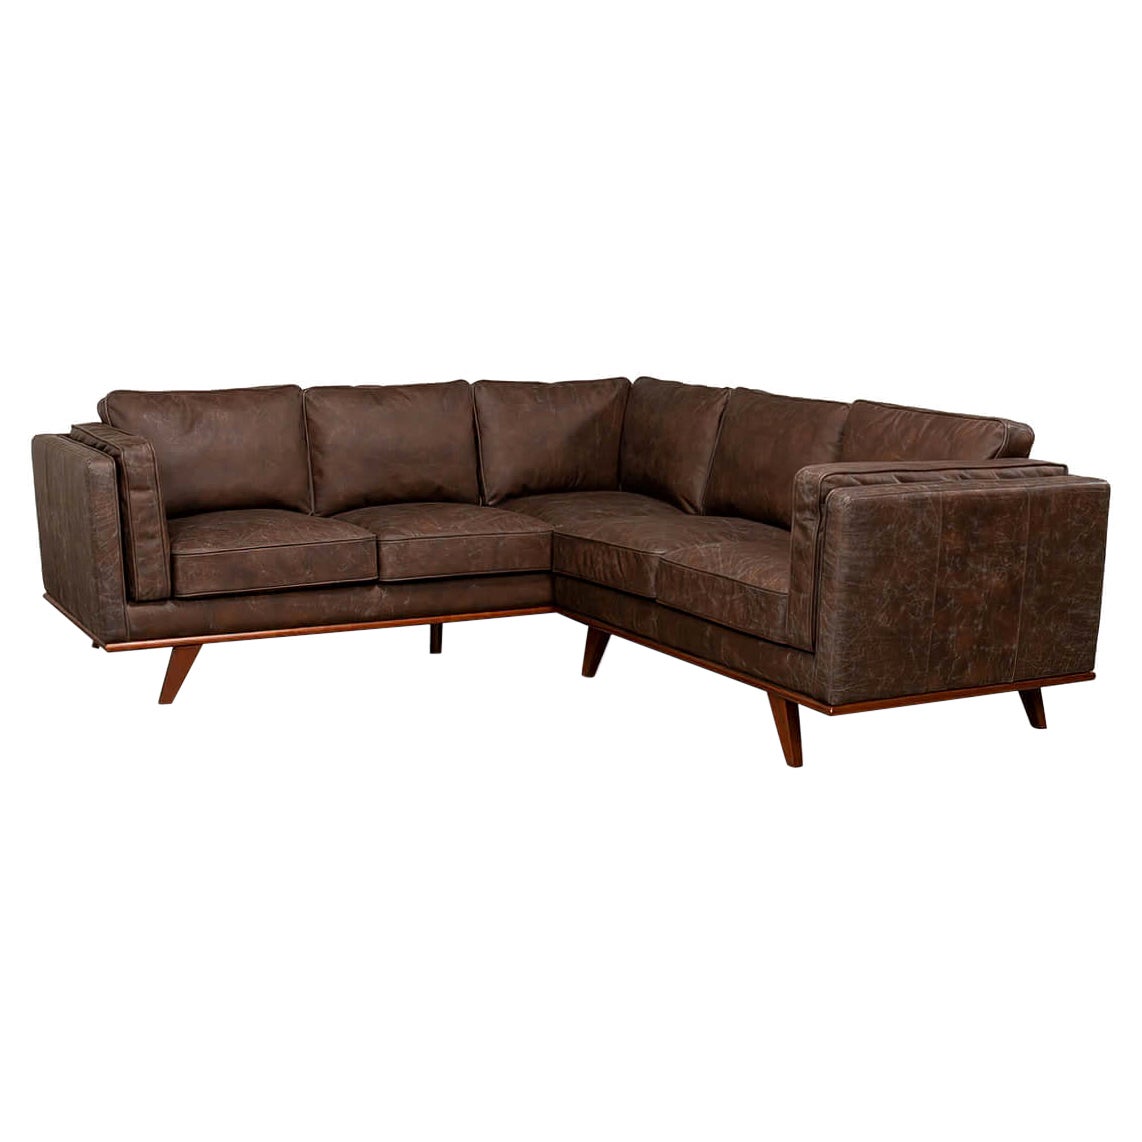 European Mid Century Style Leather Sectional Sofa